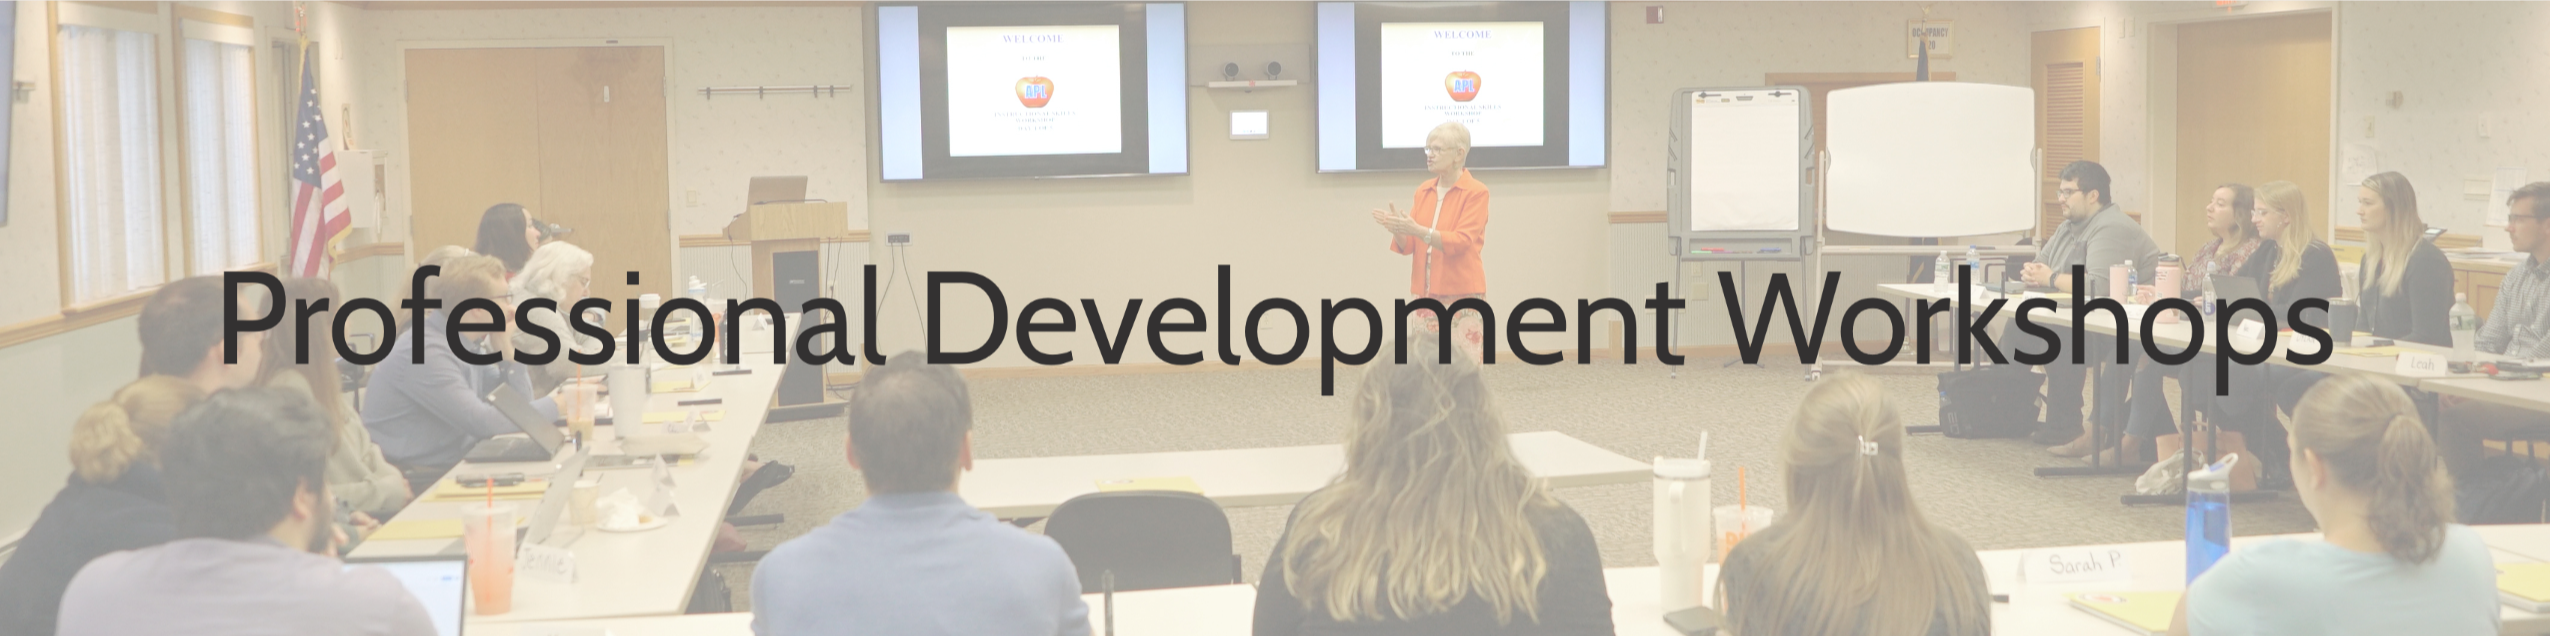 Professional Development/Workshops header